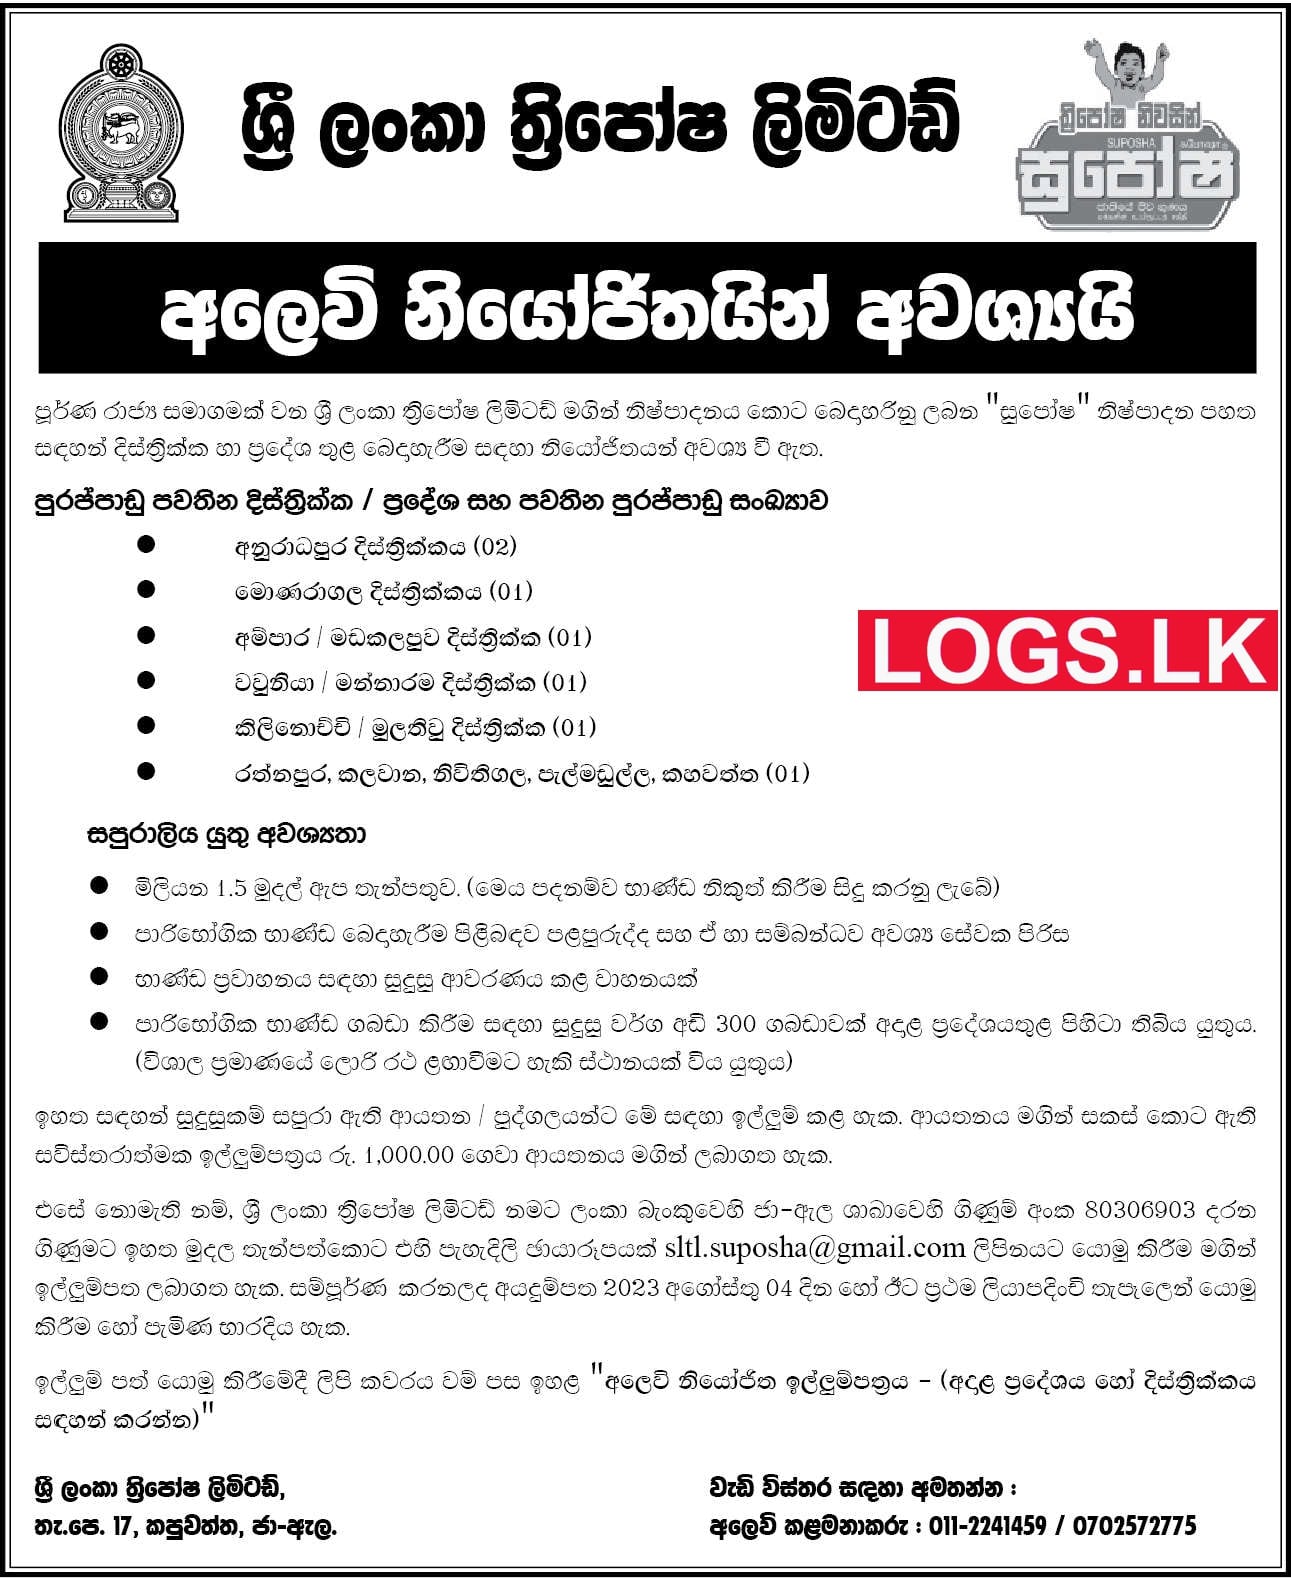 Sales Agents - Sri Lanka Thriposha Limited Job Vacancies 2023 Application Form Download